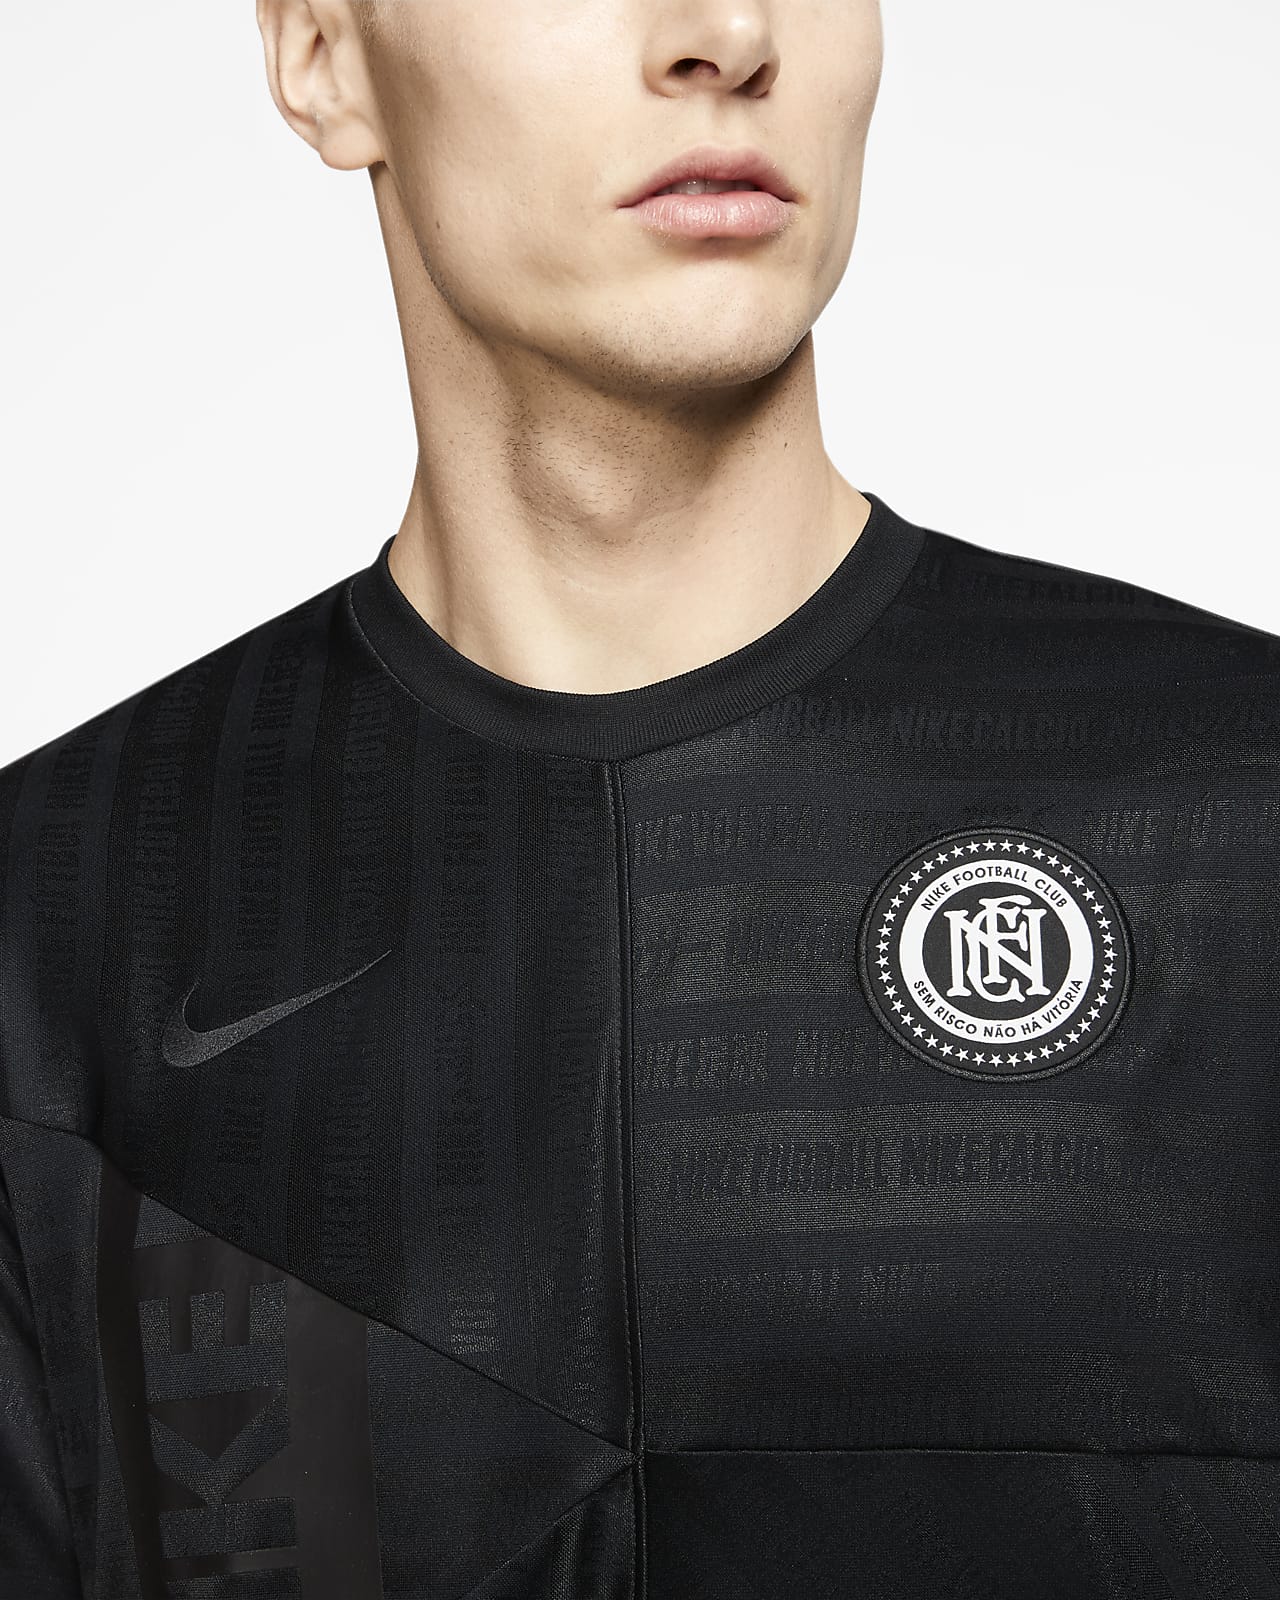 Orkaan huiselijk kubus Nike F.C. Away Football Shirt. Nike AU